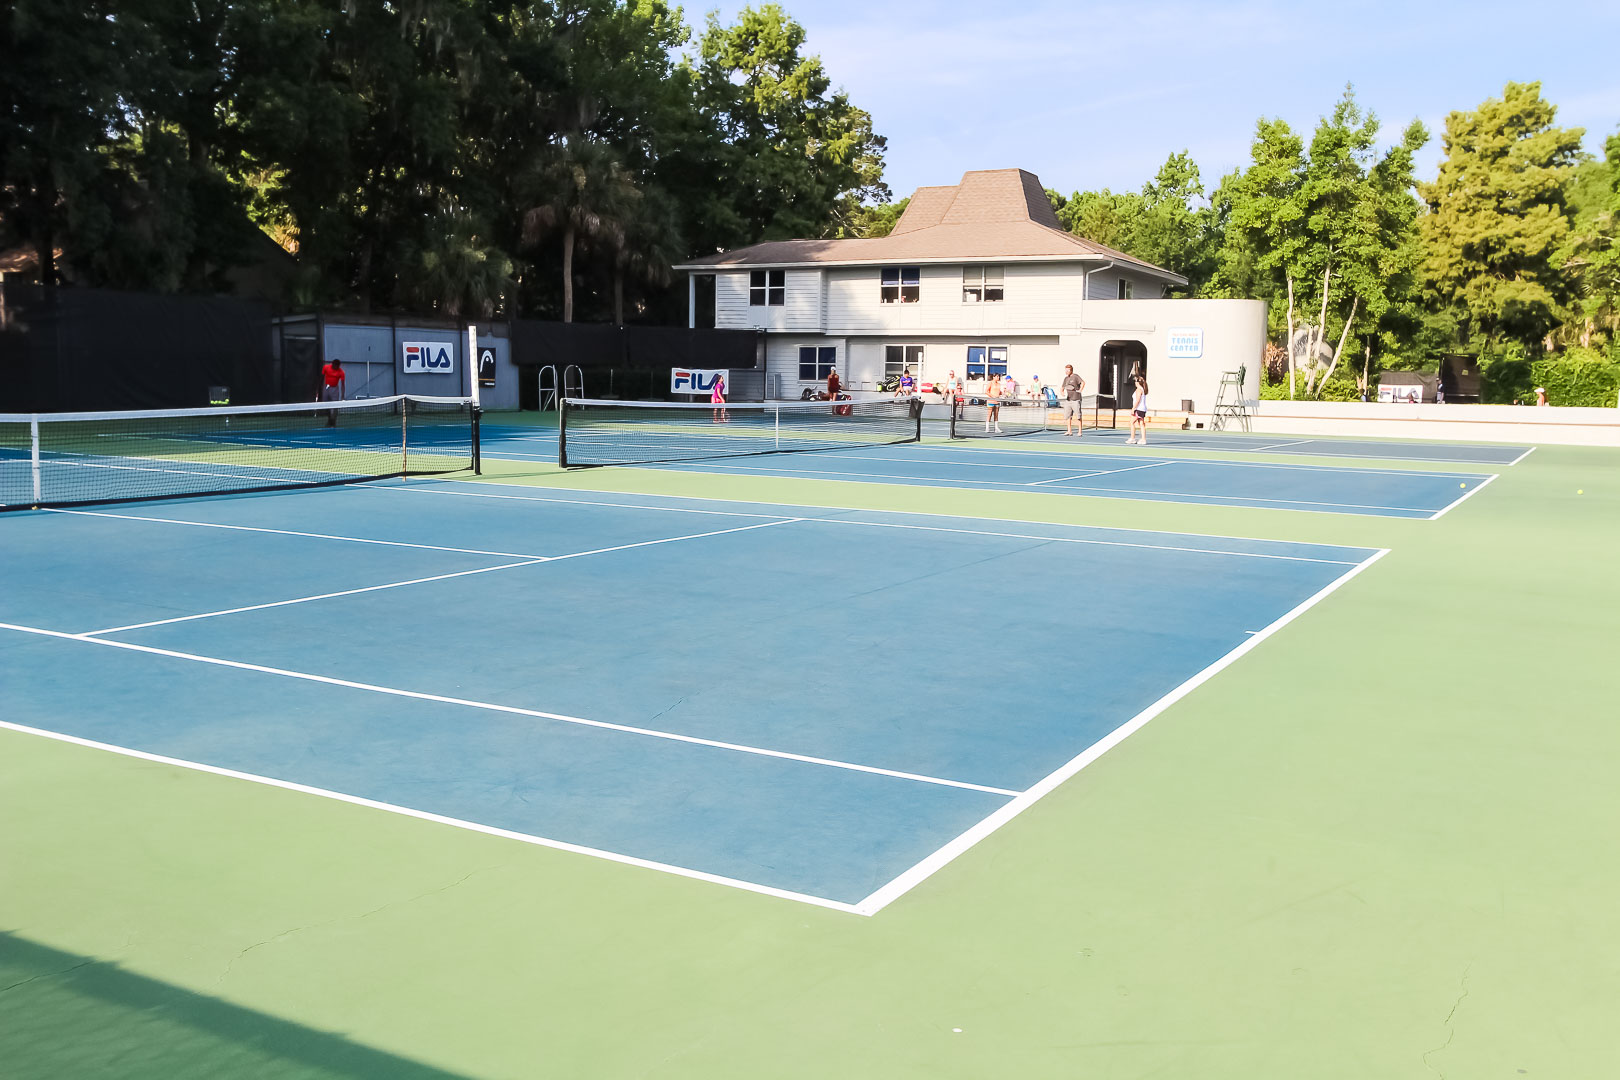 An outdoor tennis court at VRI's Players Club Resort in Hilton Head Island, South Carolina.